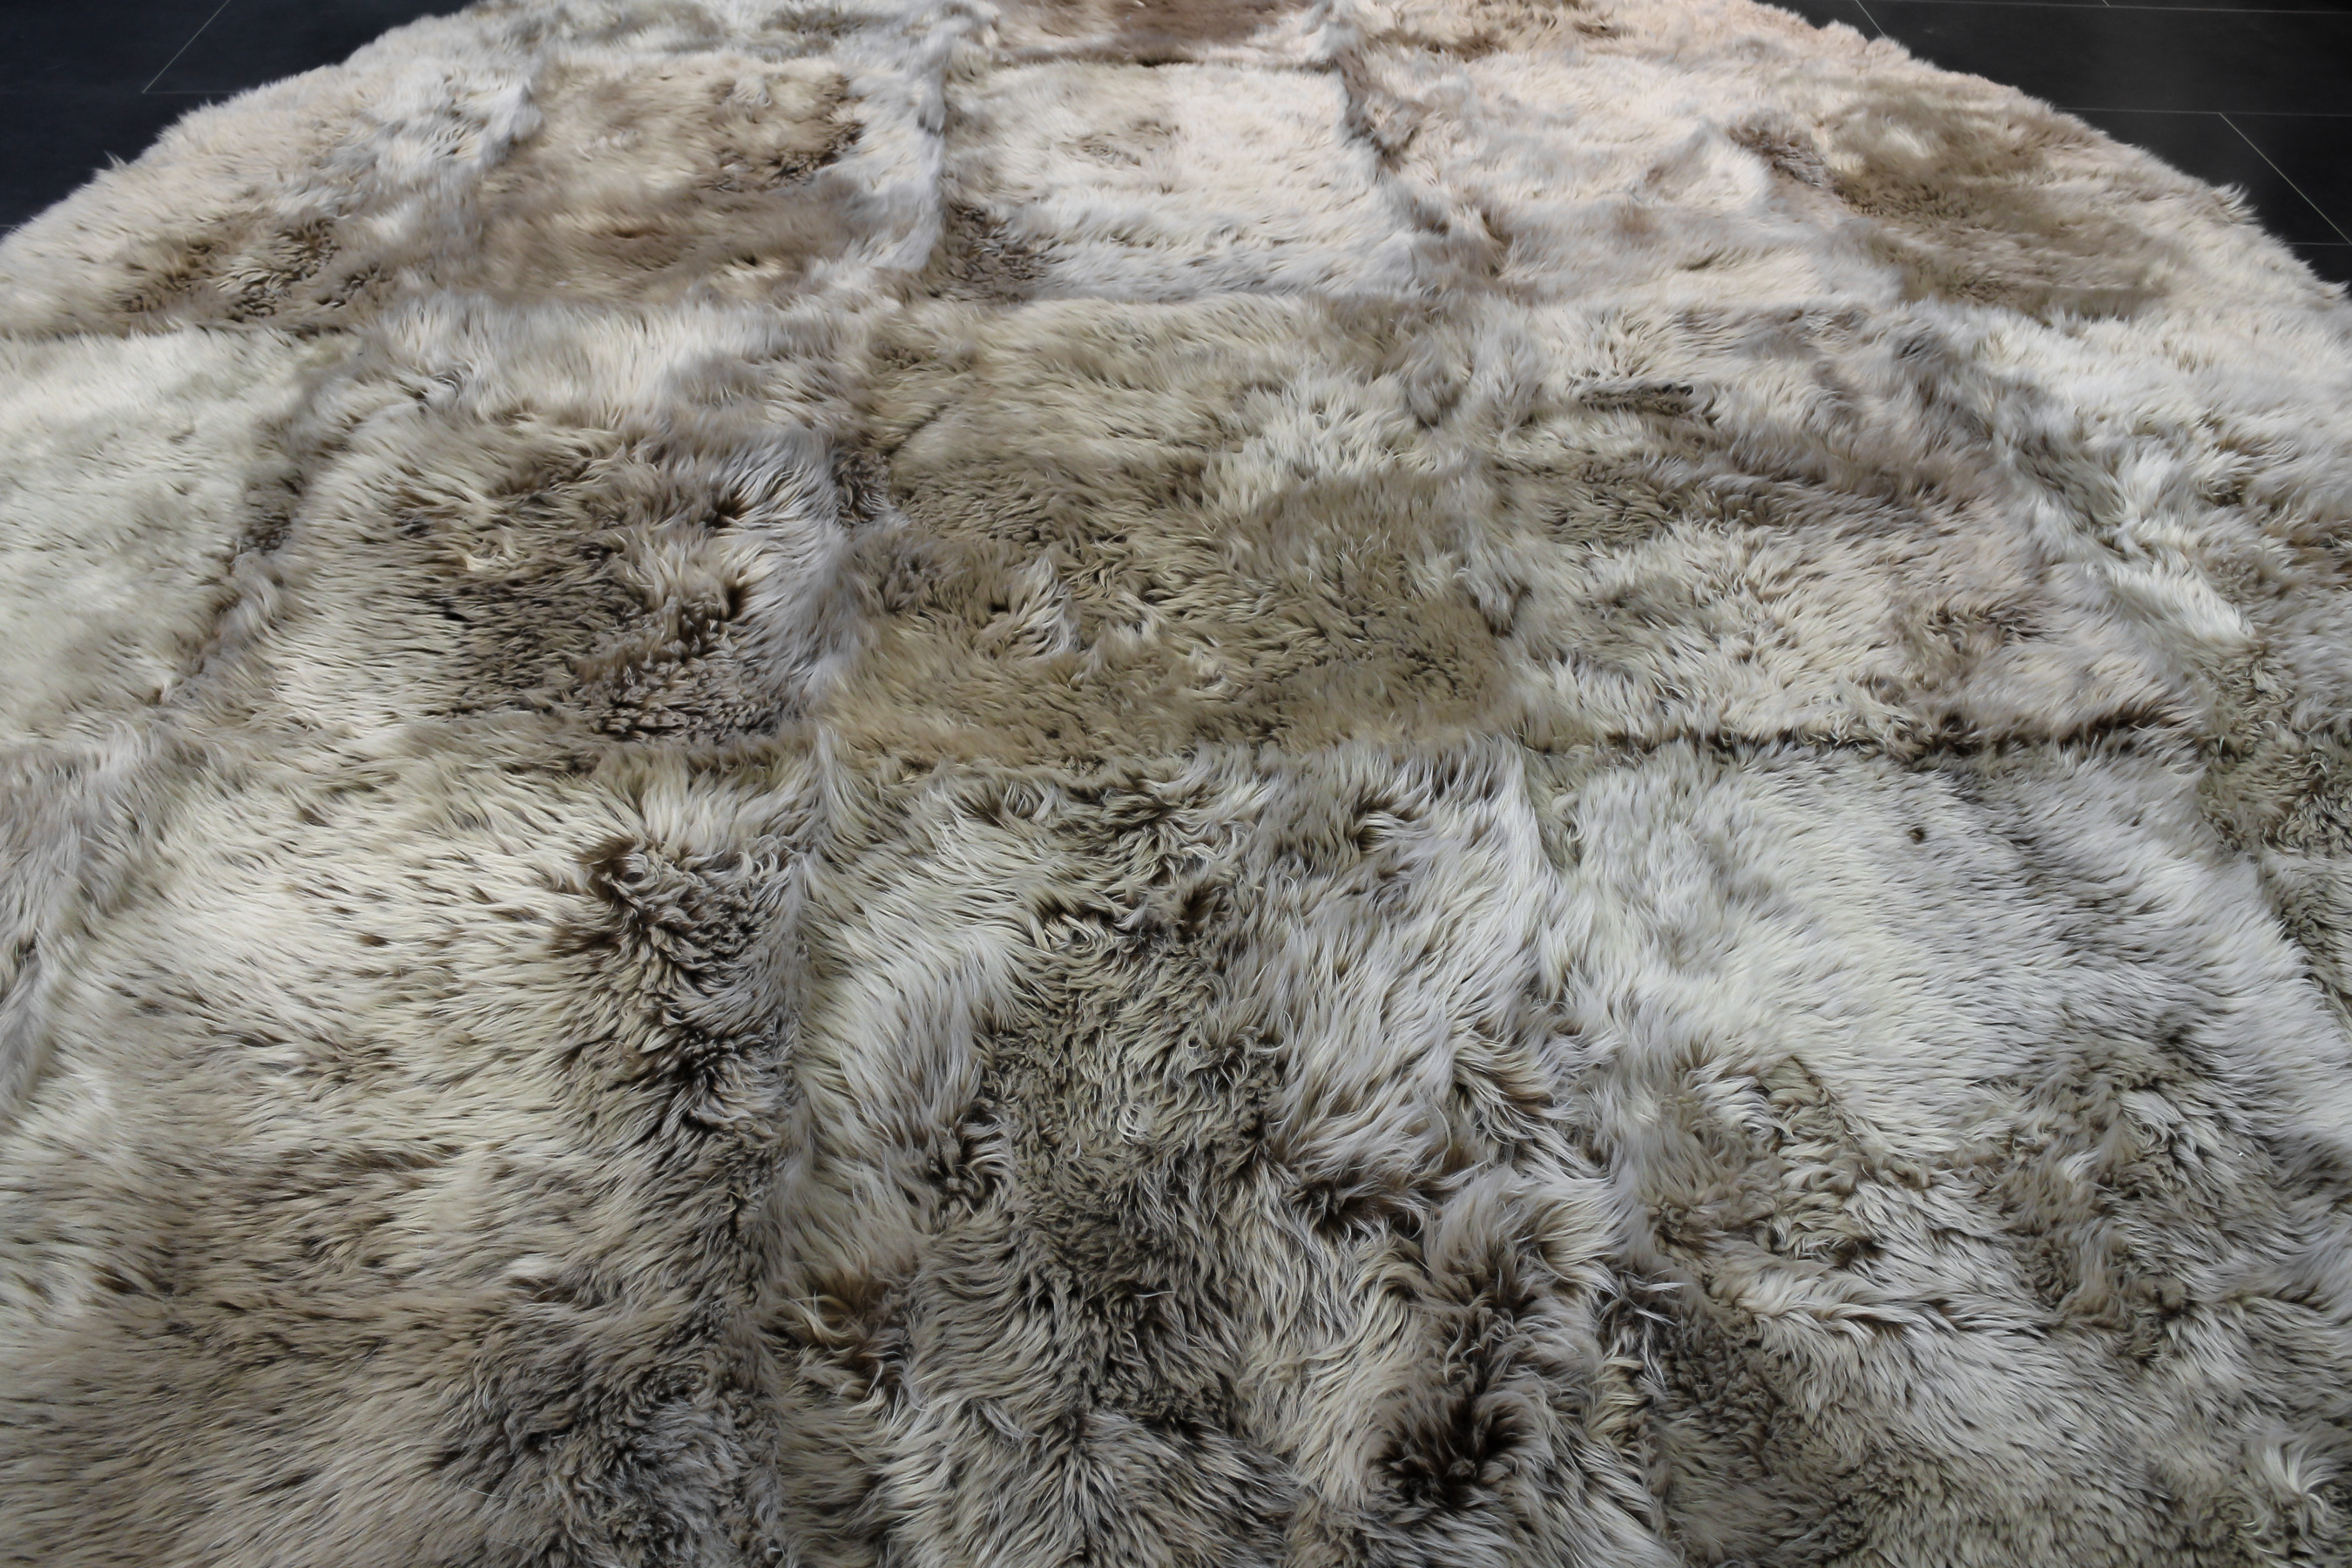 Lamb fur carpet with white peaks